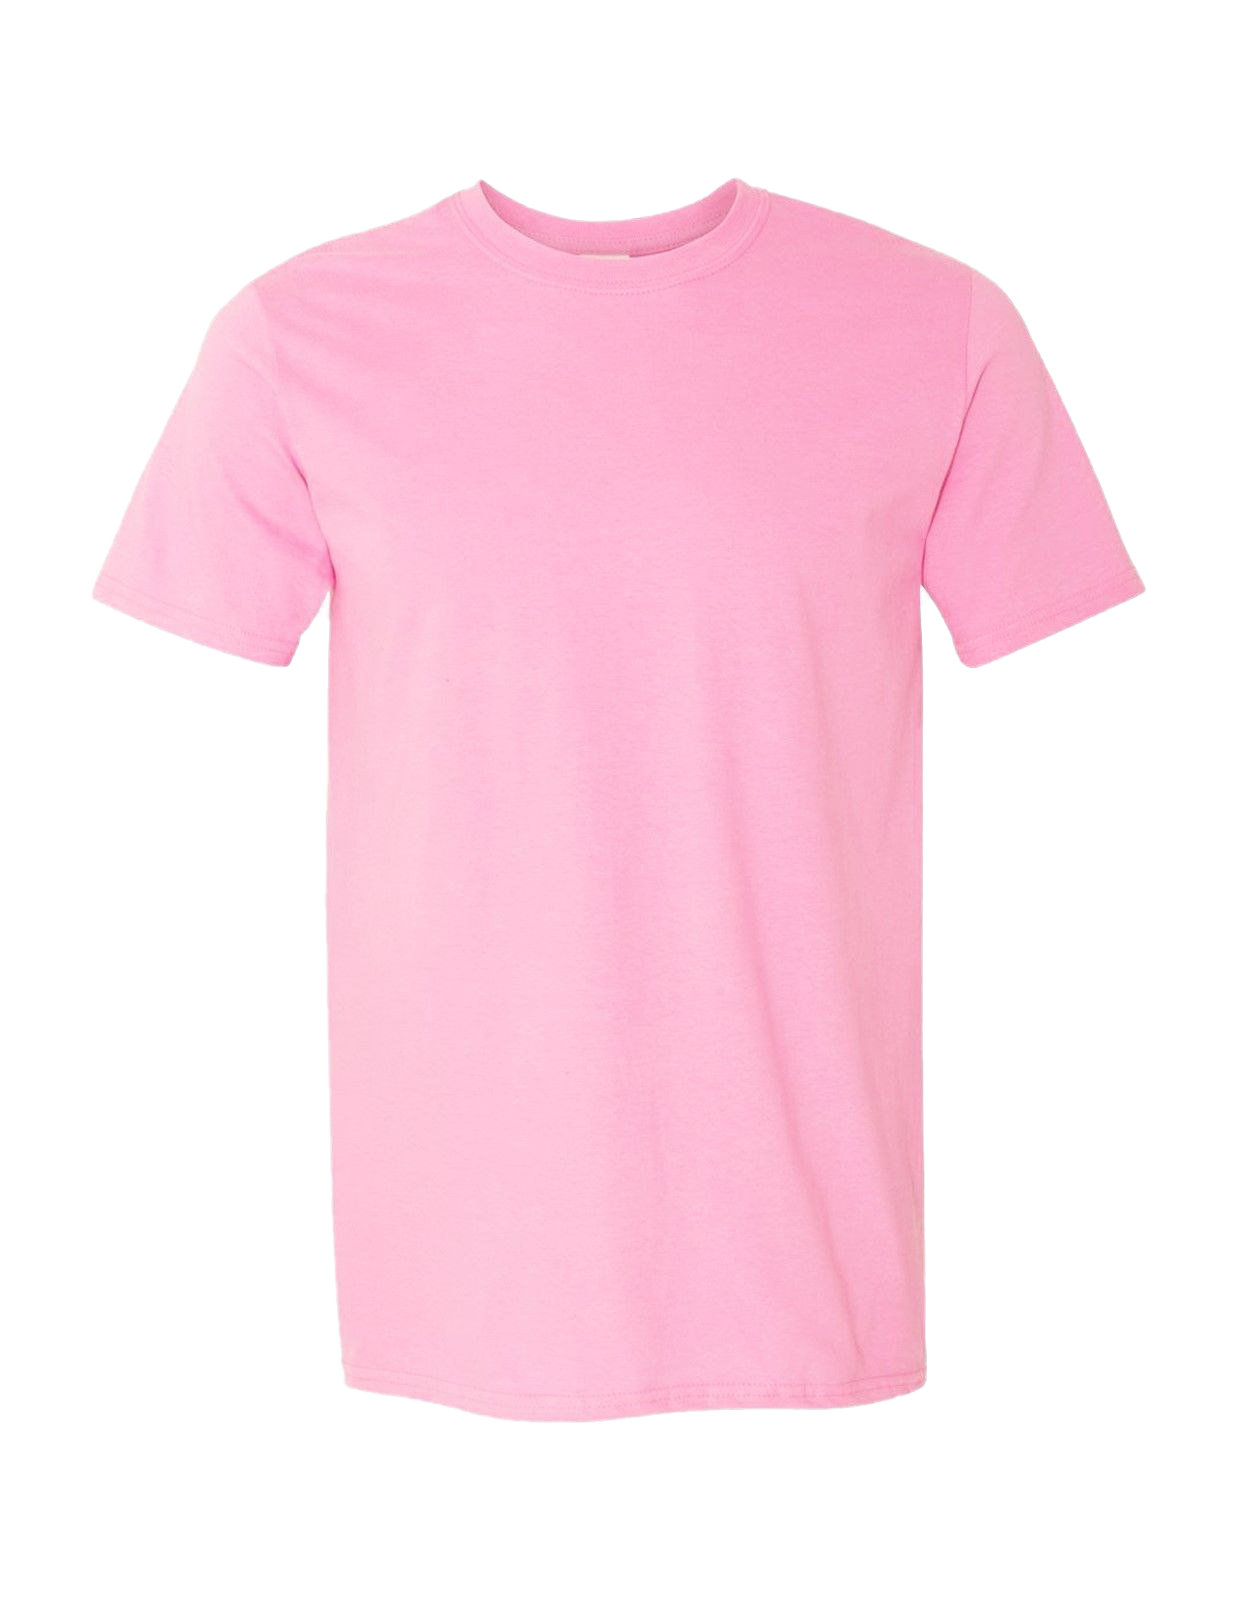 Pink T-Shirt PNG Transparent Images, Pictures, Photos ...